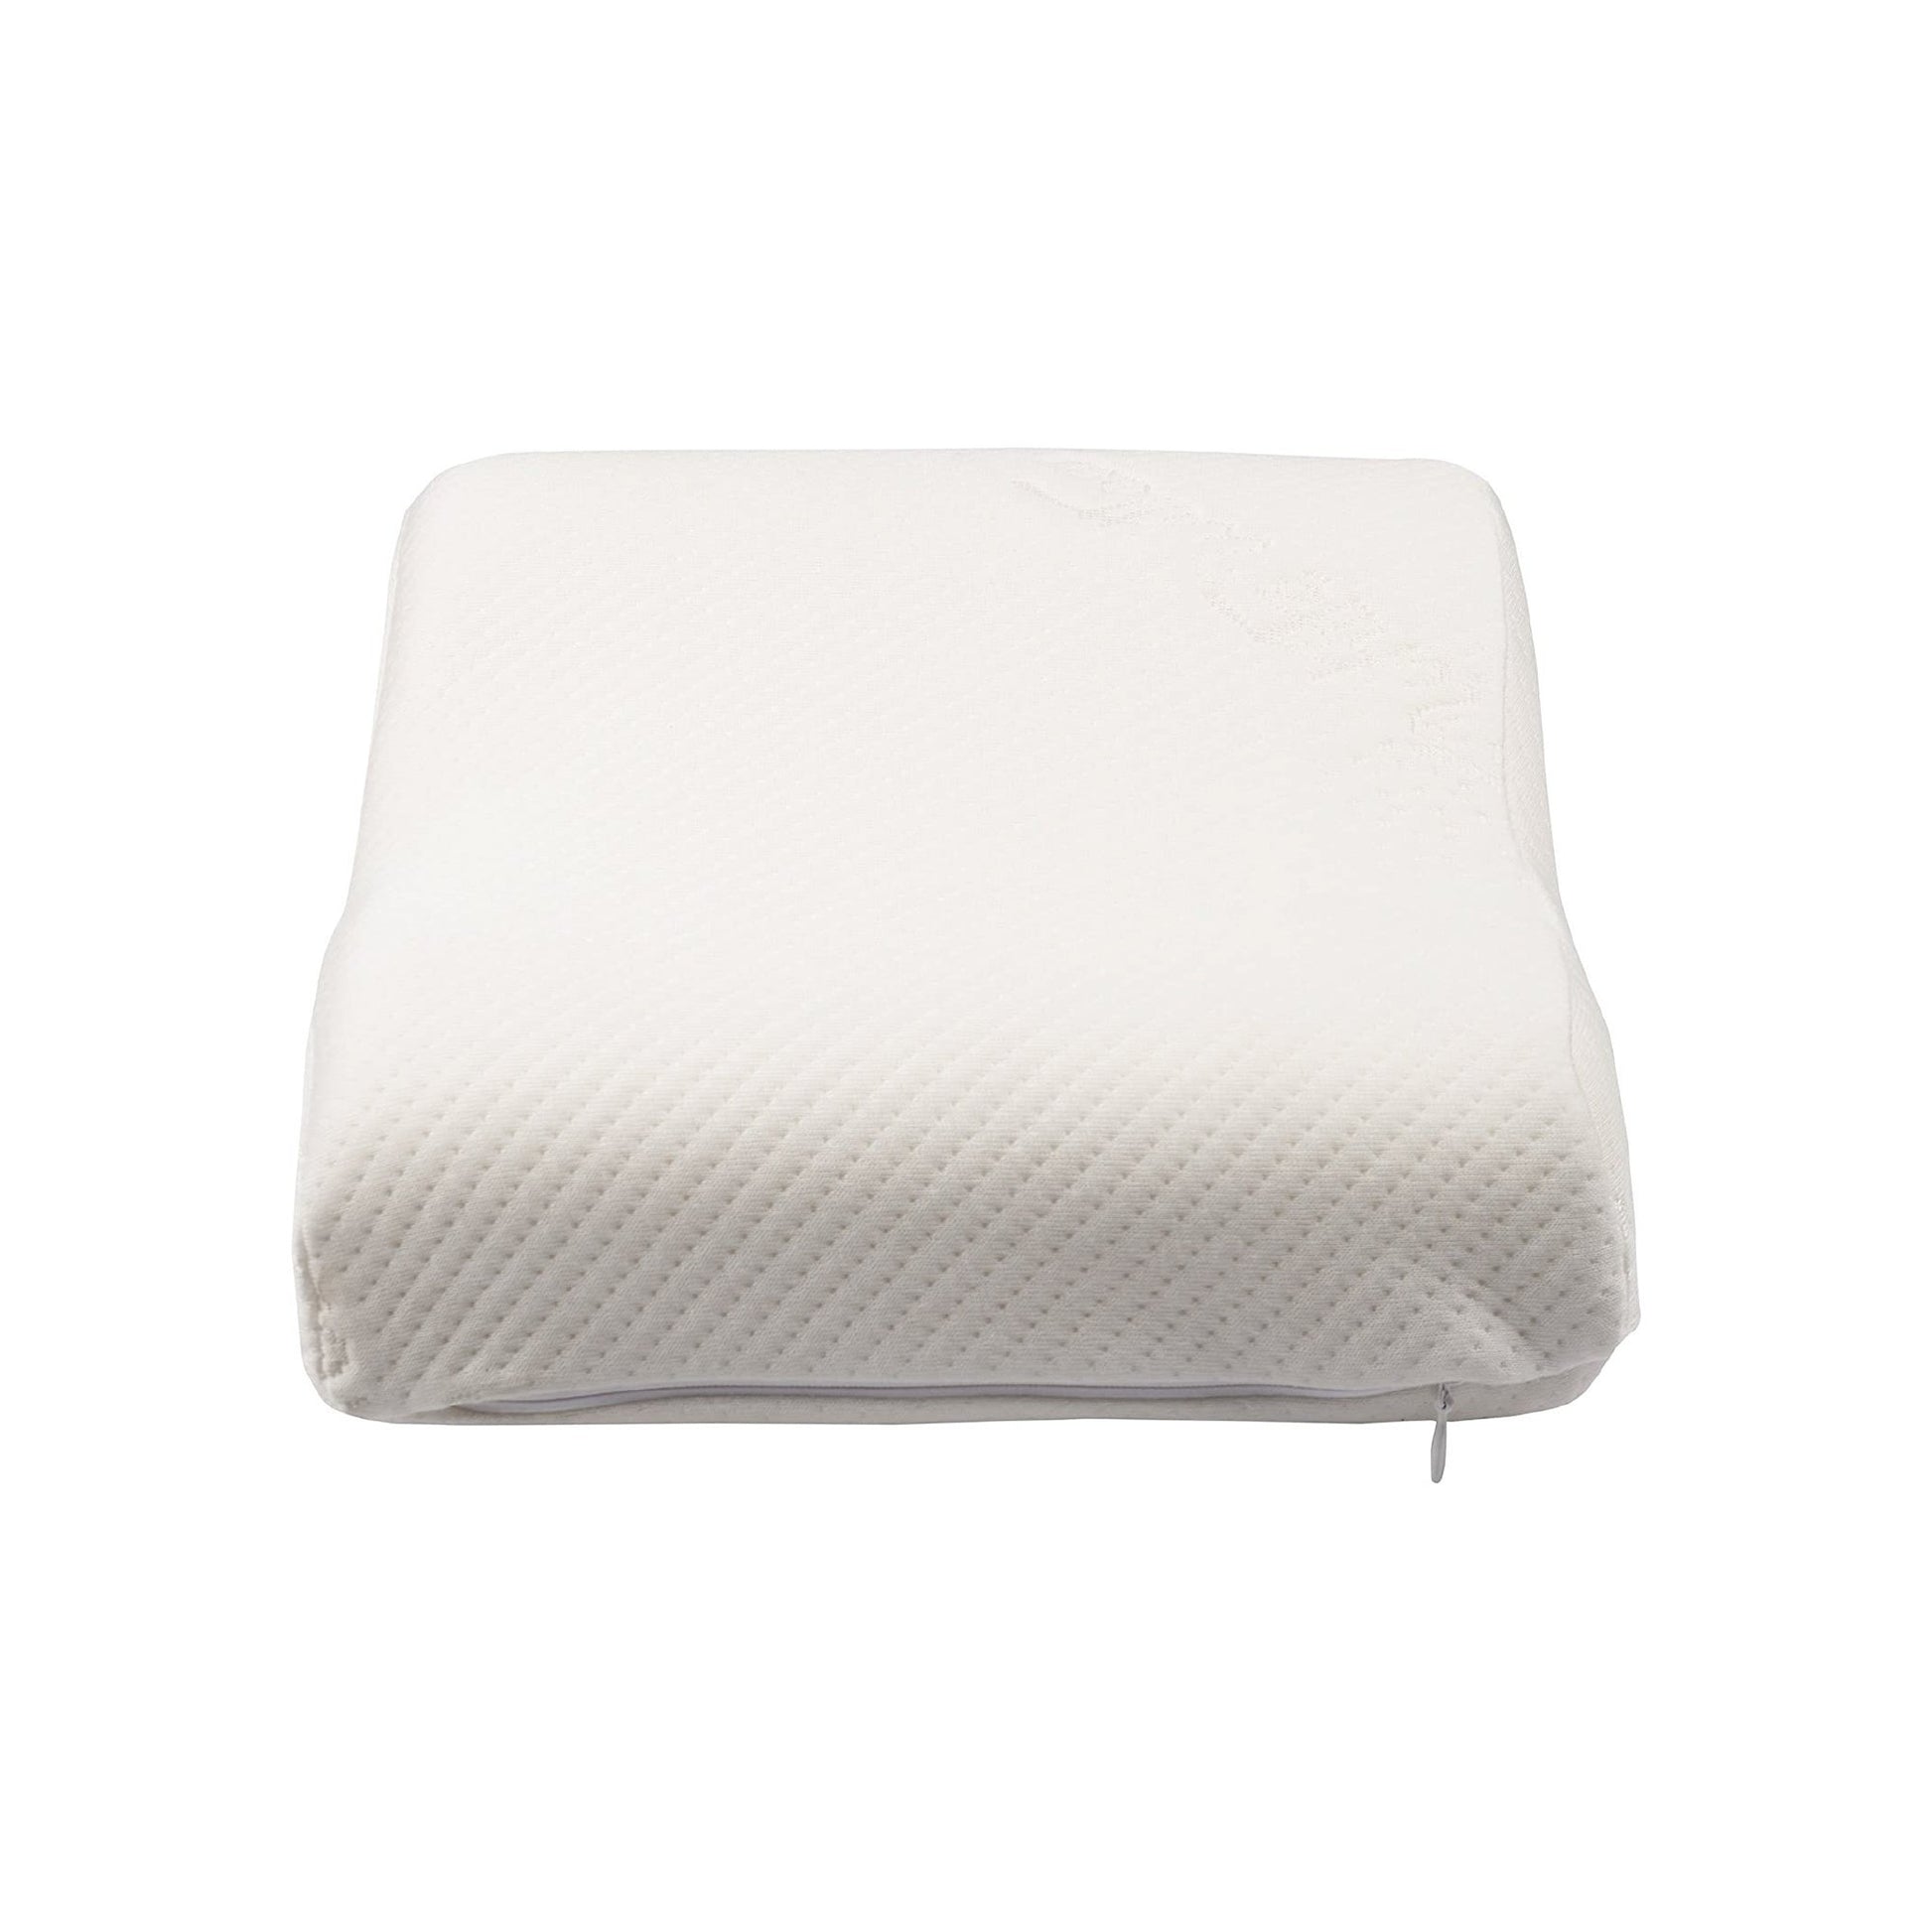 Notus - Memory foam Small Contour Travel Pillow - Medium Firm - The White Willow